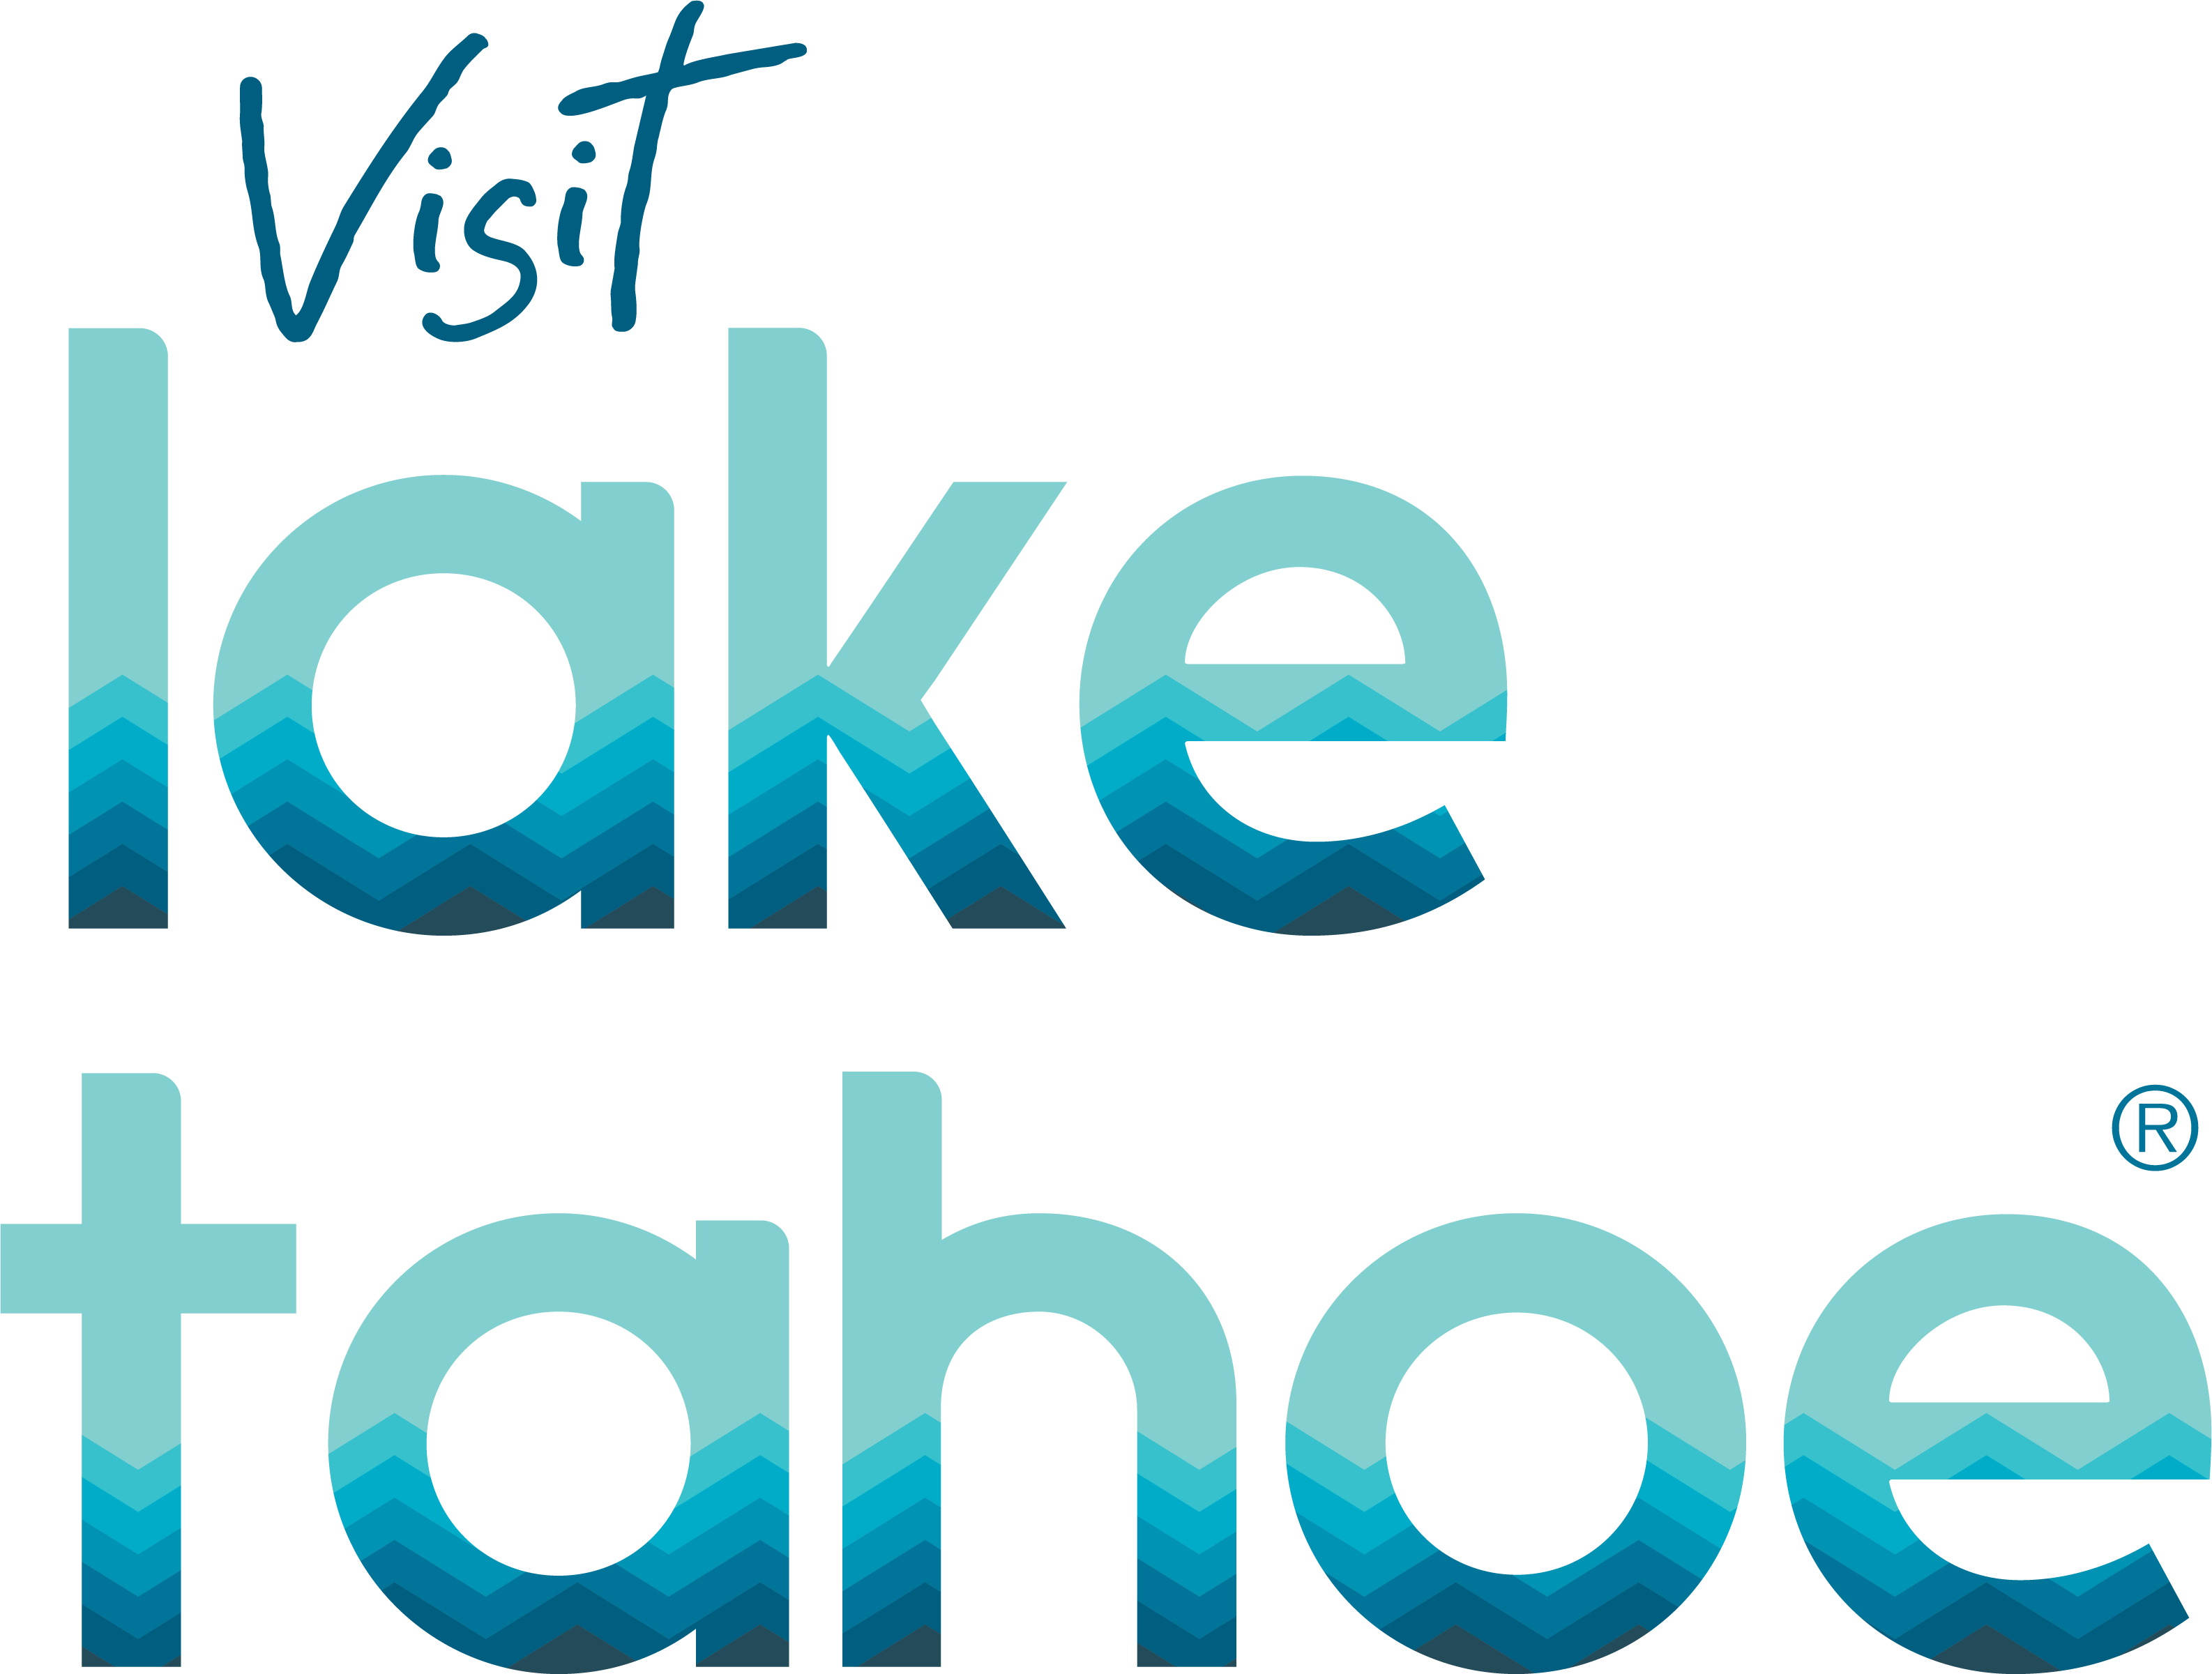 Lake Tahoe Visitors Authority